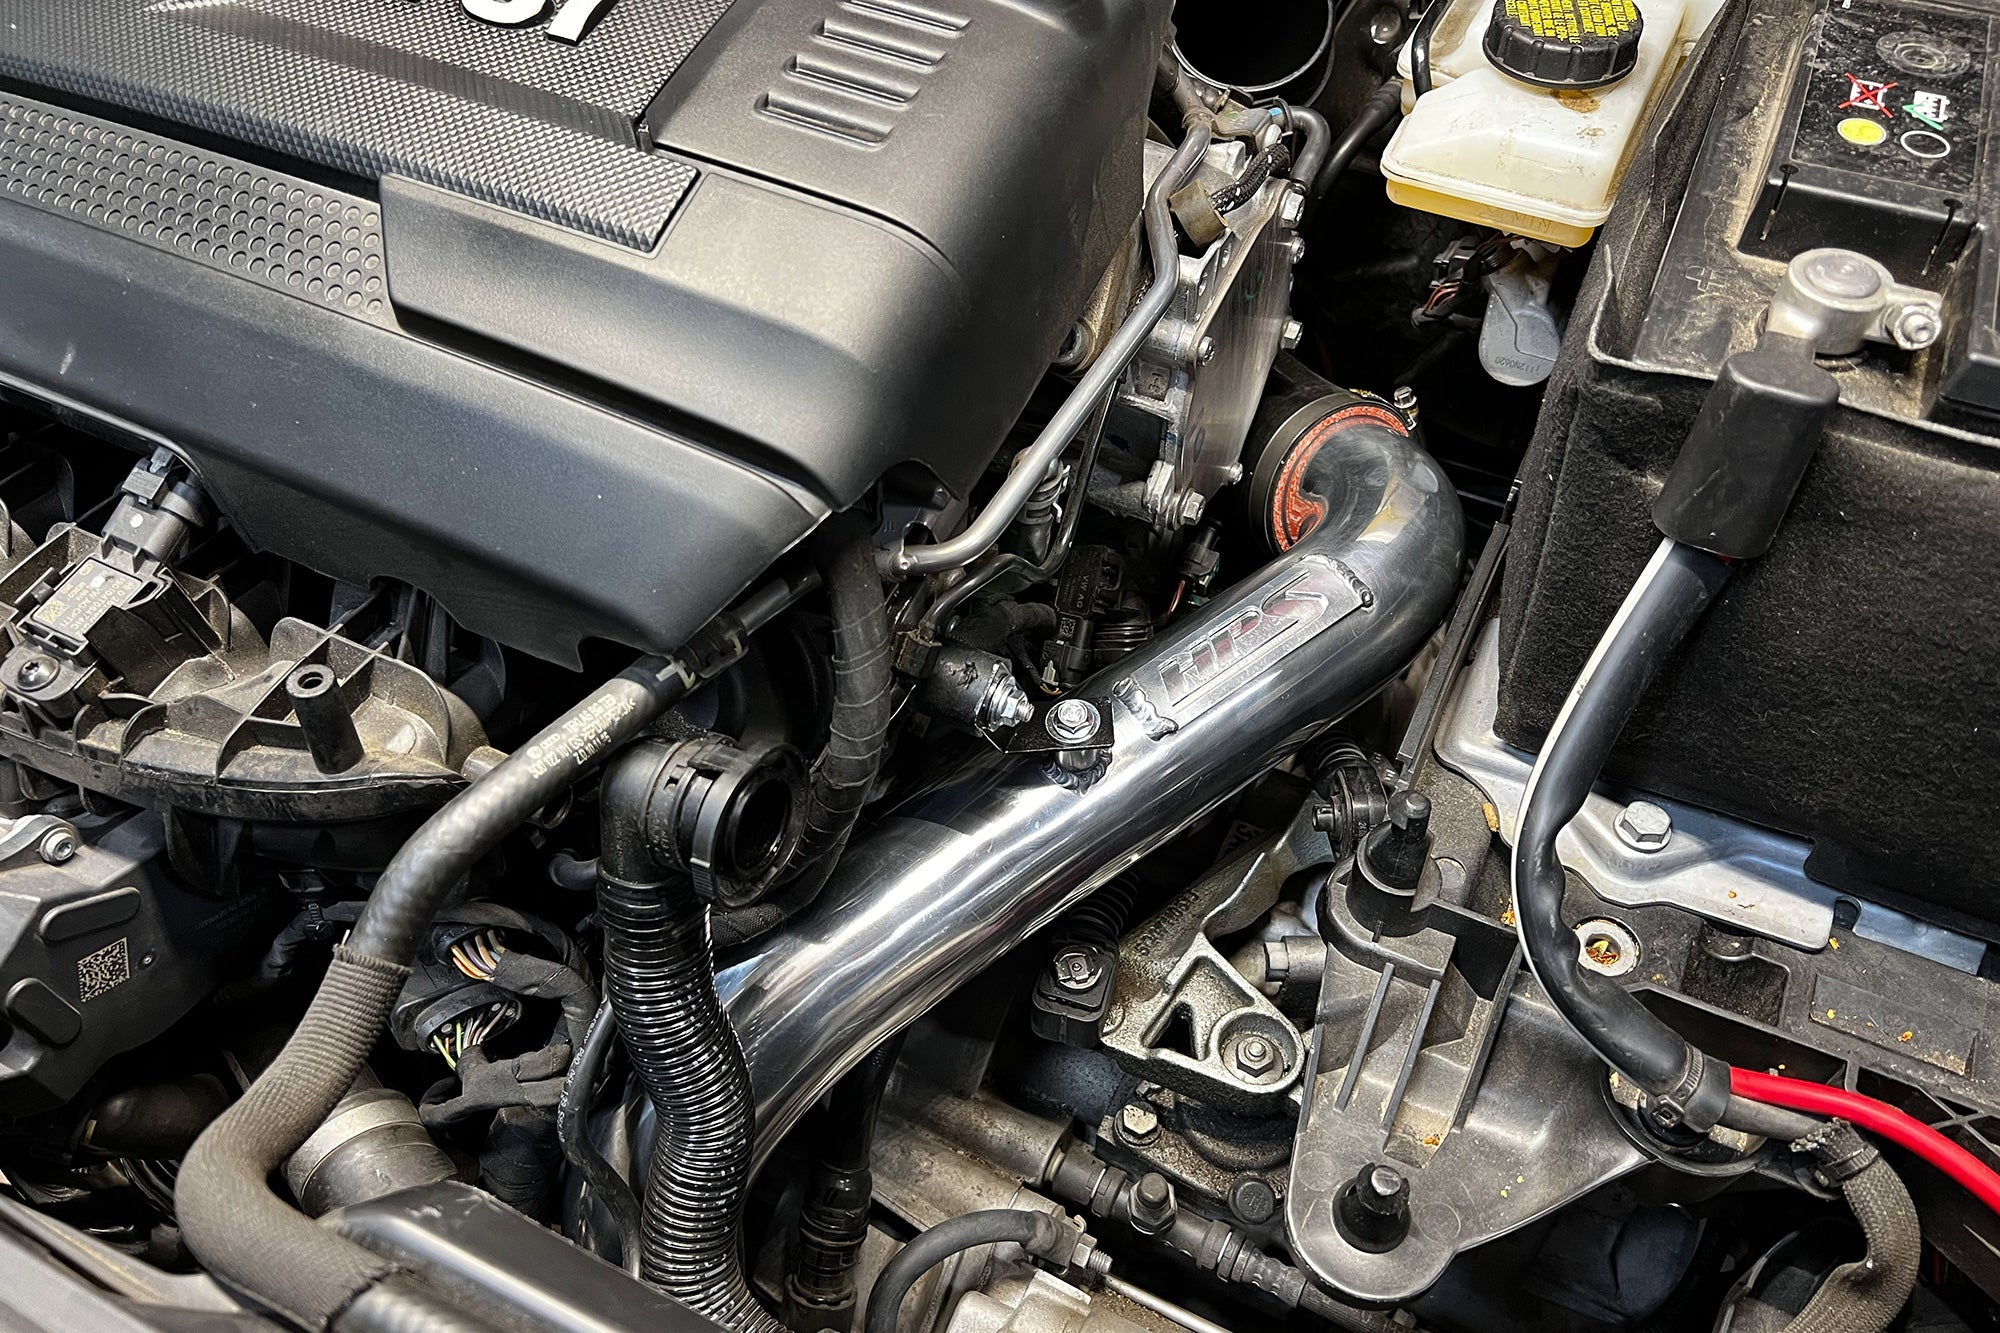 HPS Intercooler Hot Side Charge Pipe Installed 19-21 Volkswagen Jetta MK7 2.0L Turbo 17-128P